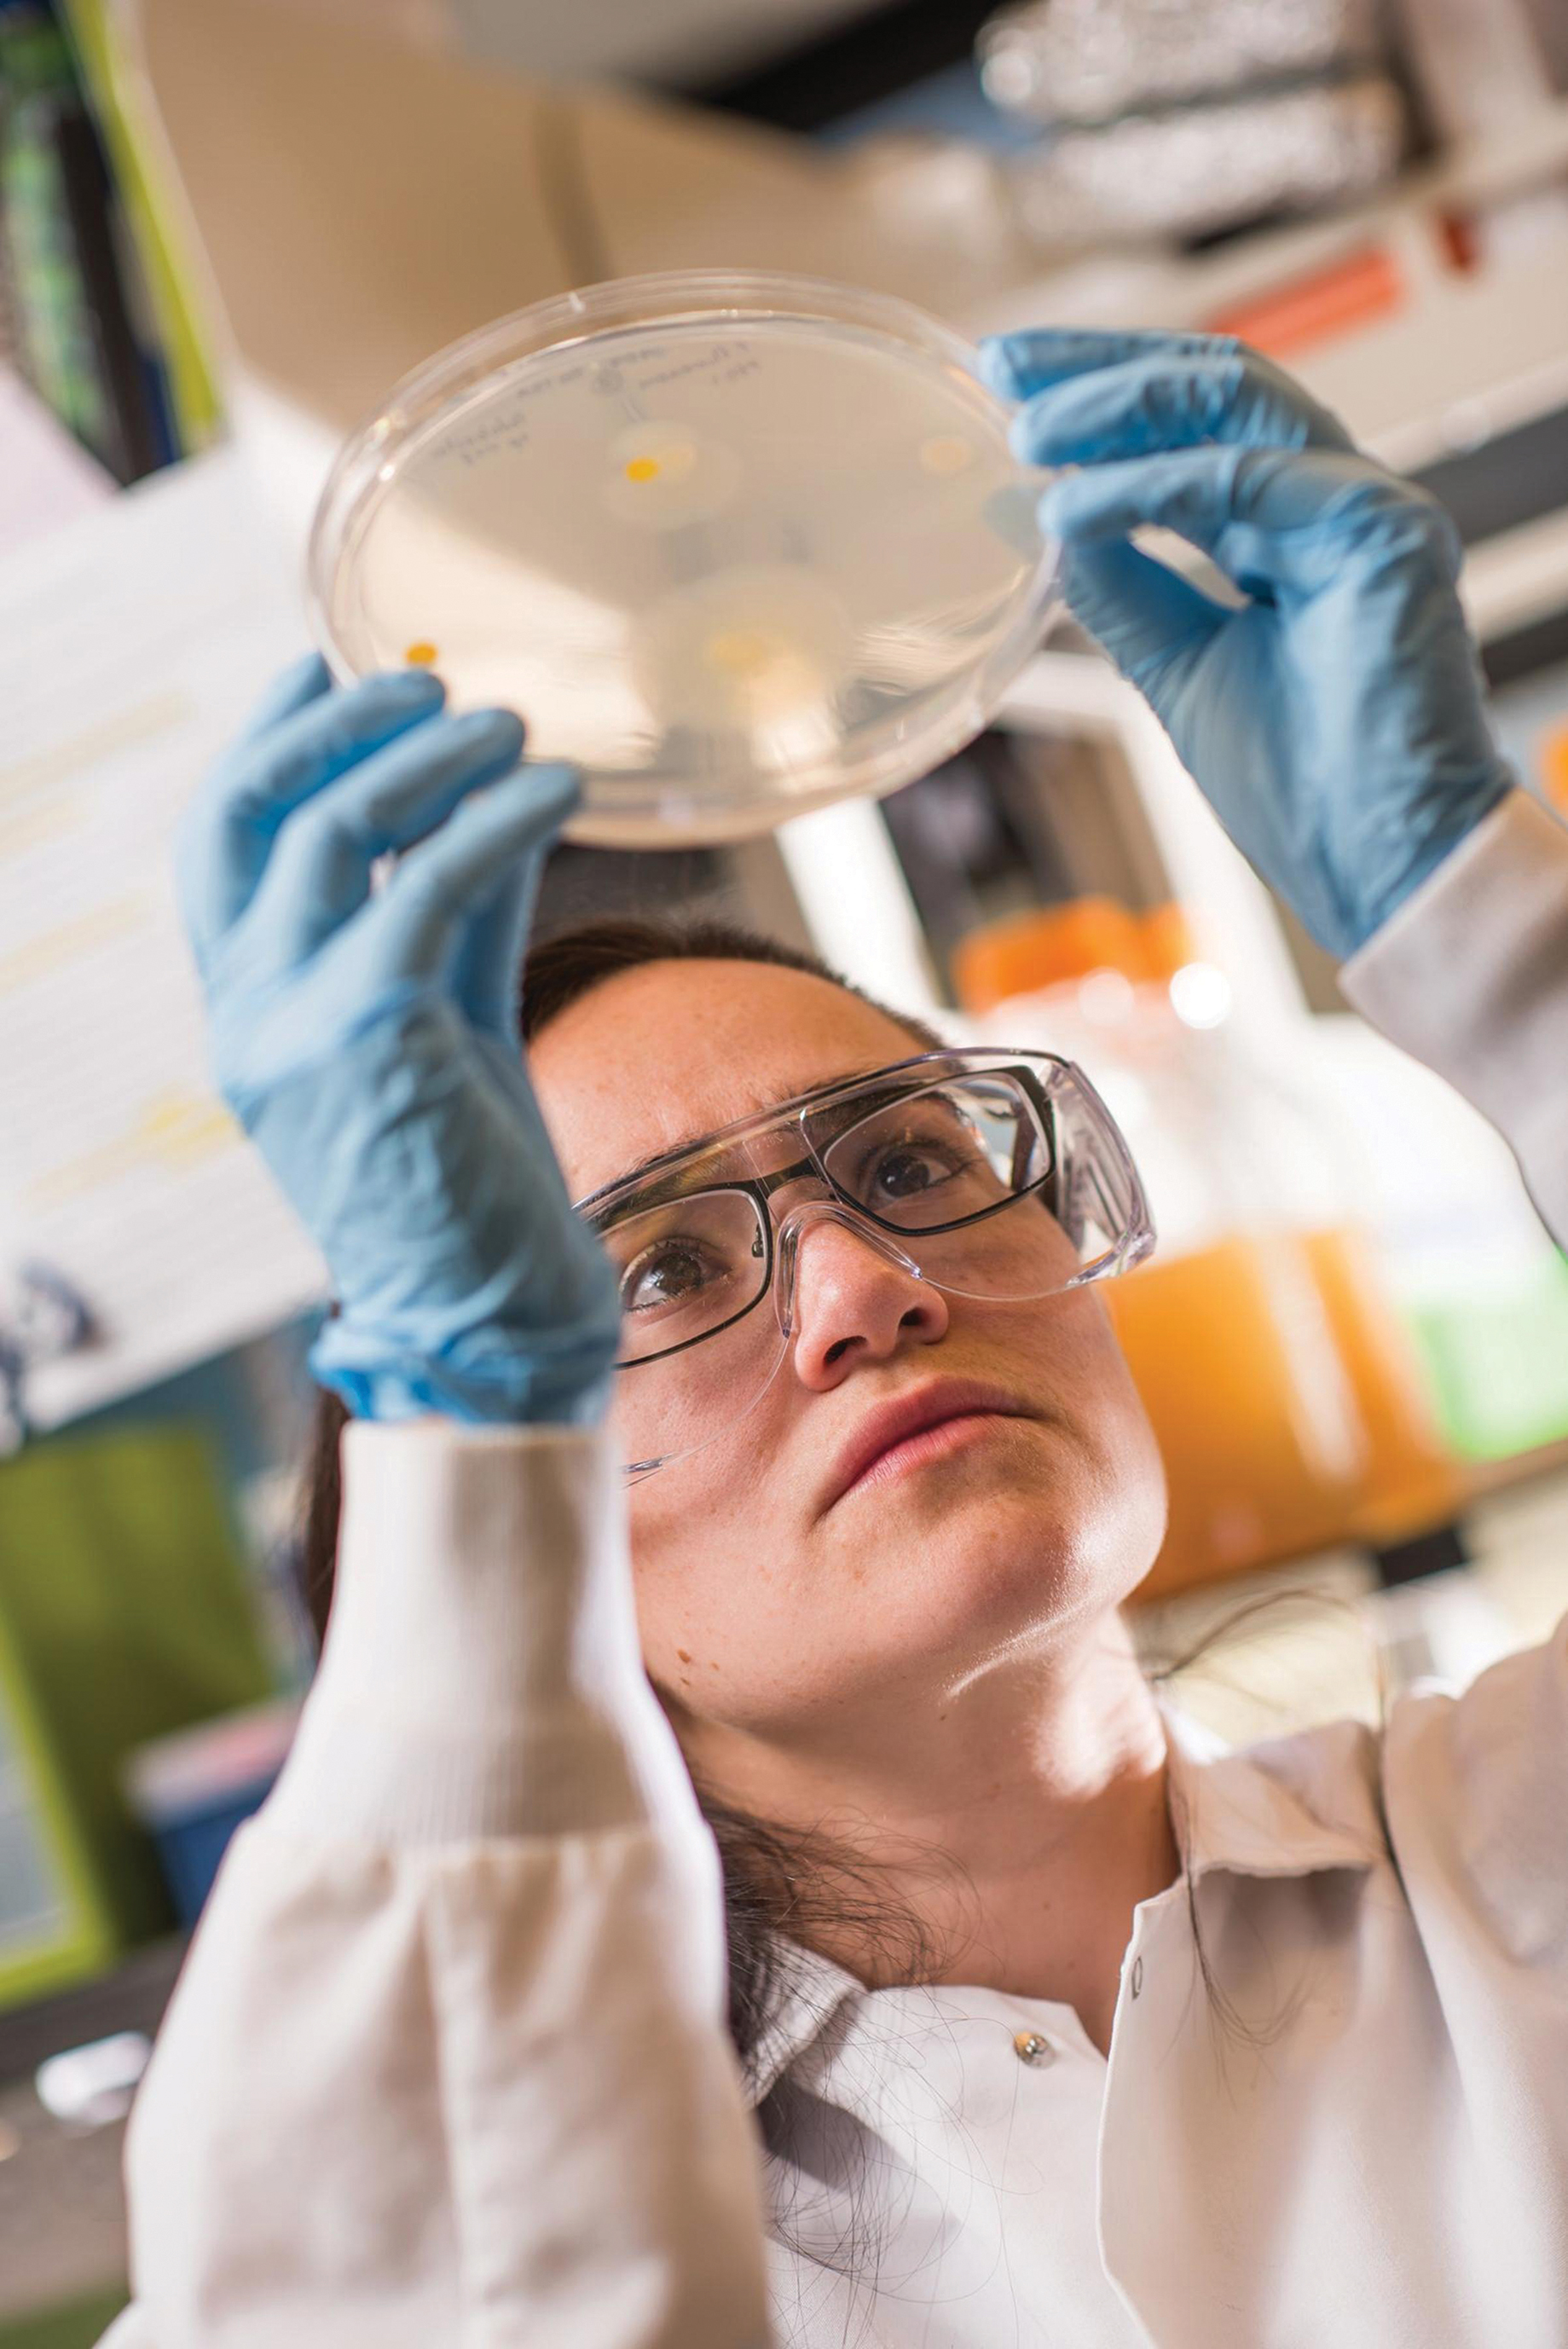 Student researcher examines petri dish